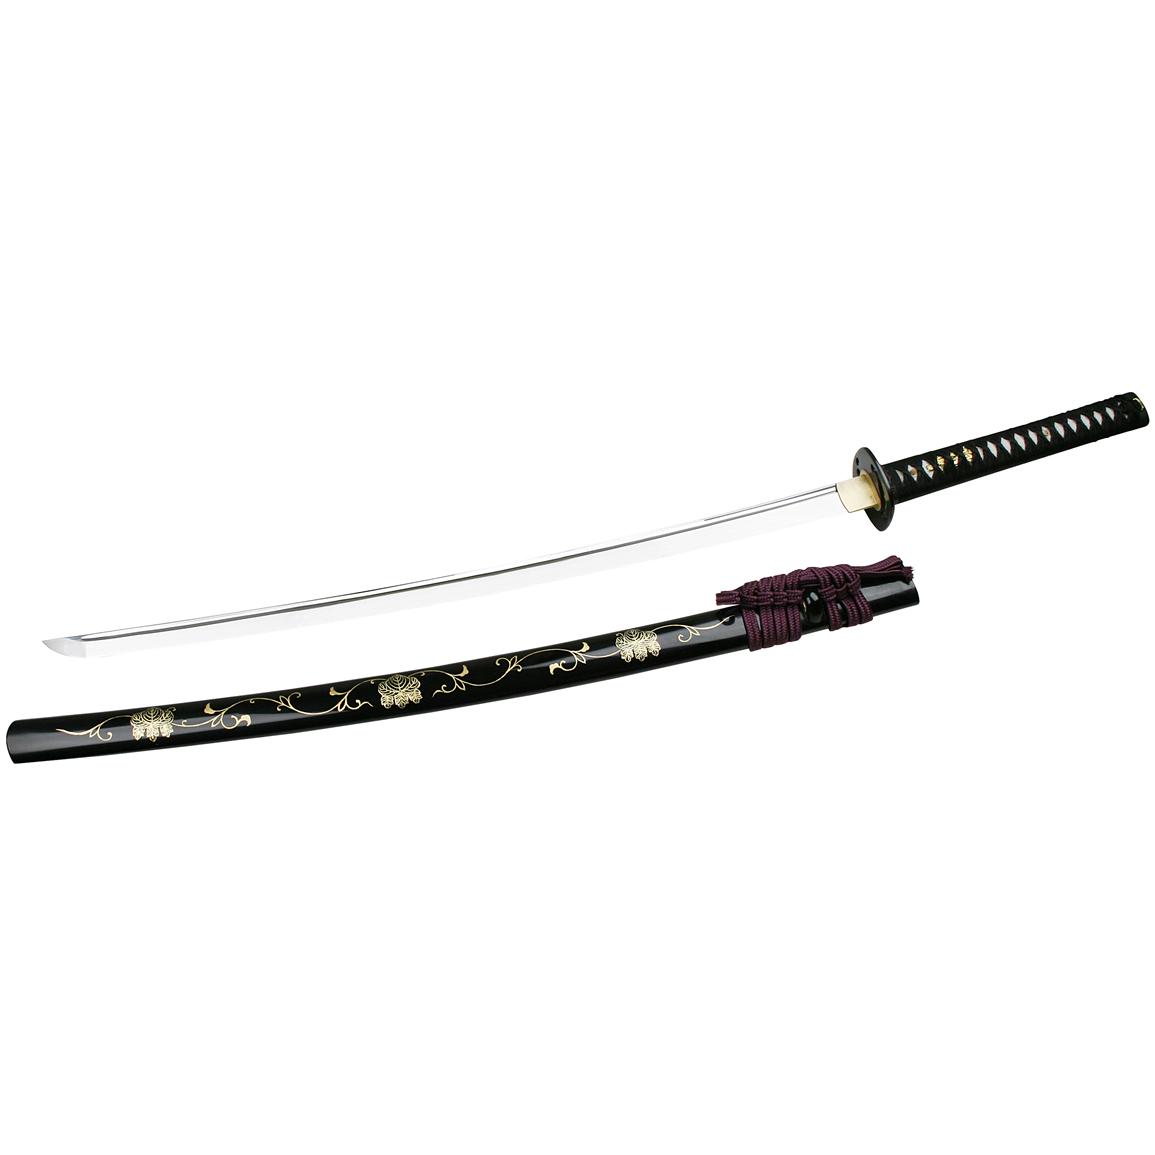 Master Cutlery MC-3057 Samurai Sword, 41 inch Overall